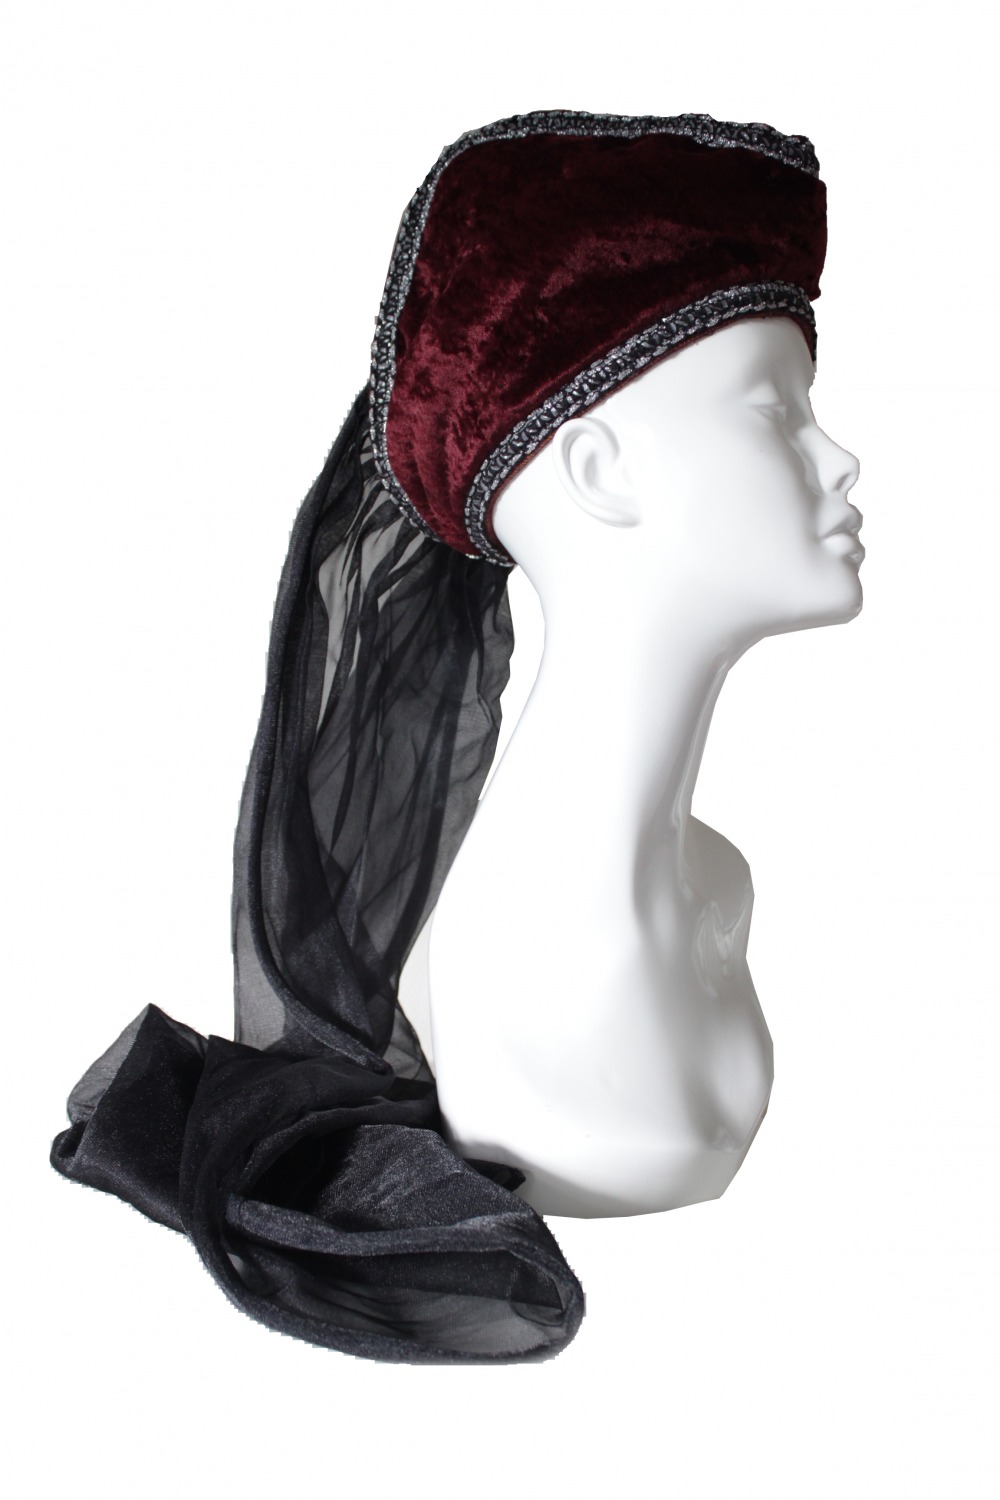 Ladies Petite Medieval Tudor Elizabethan Costume And Headdress Size 14 - 16 Image